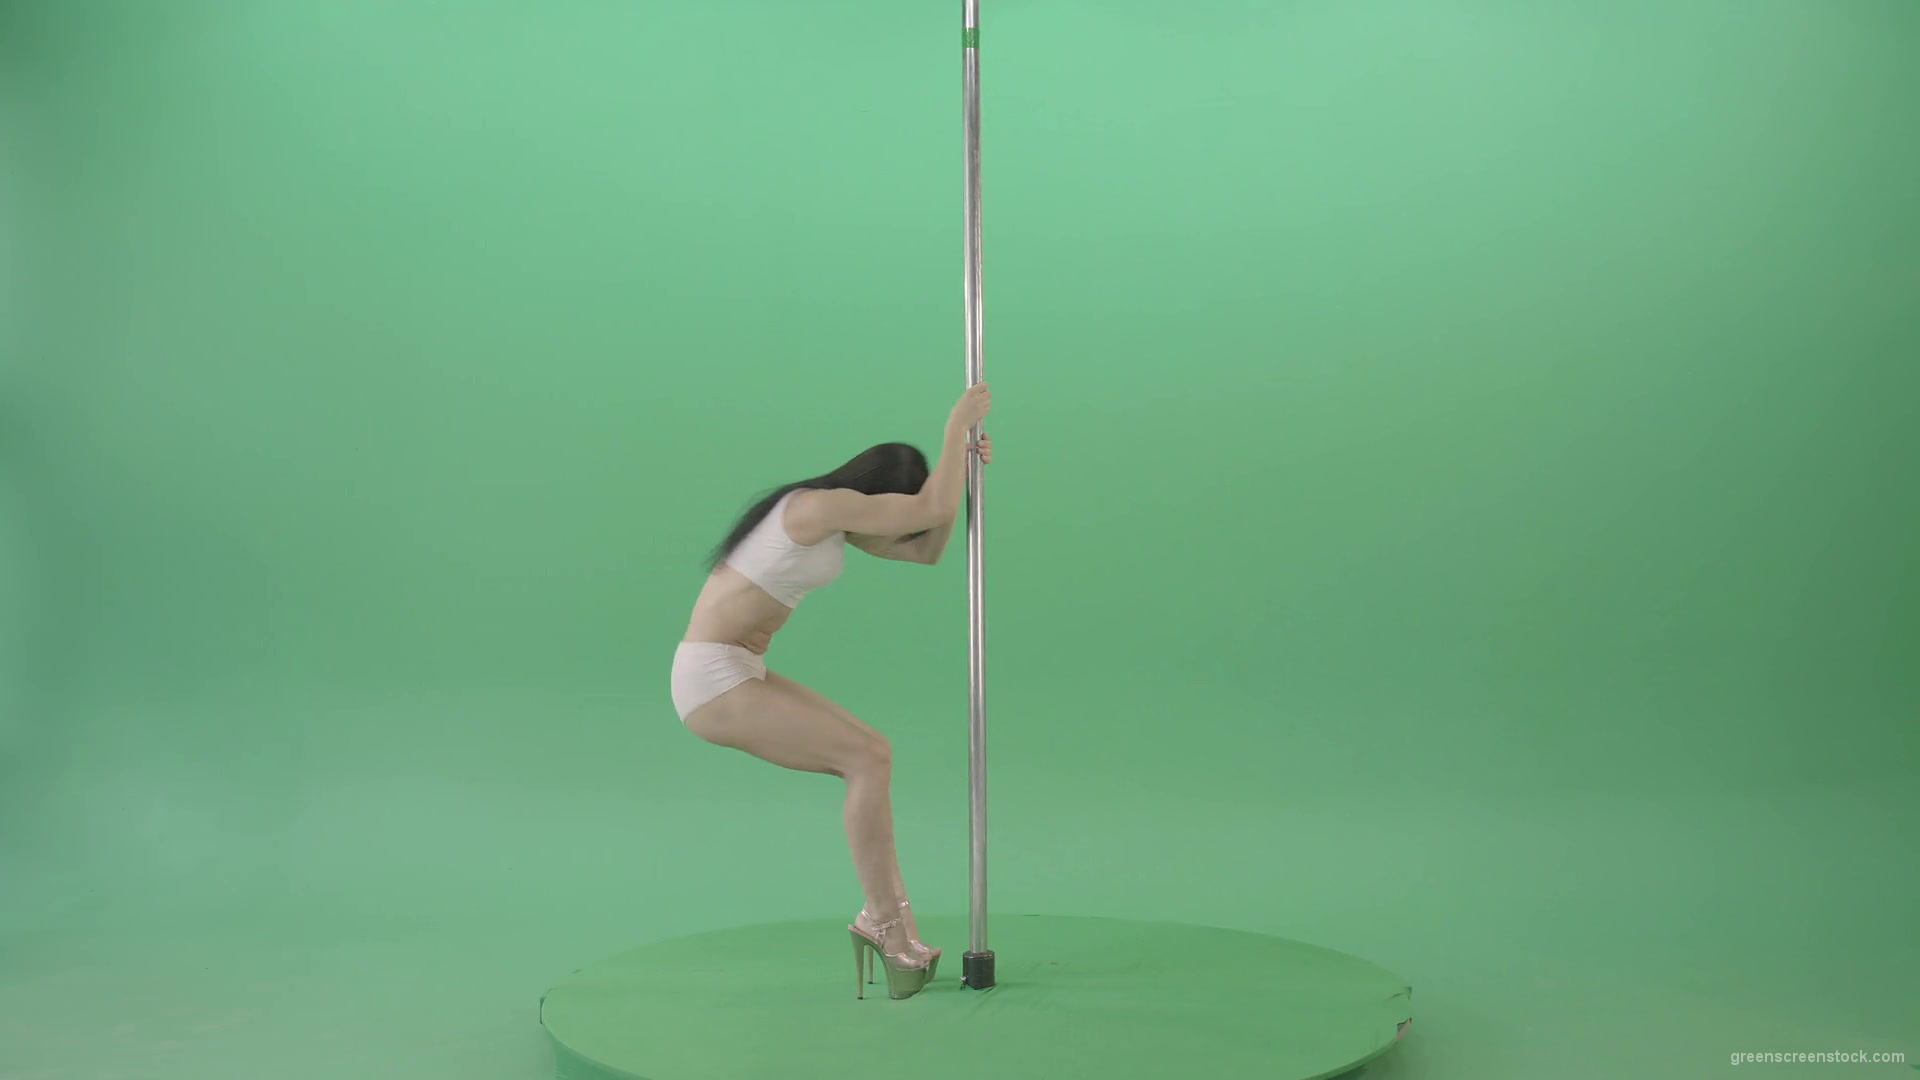 Pole-Dancing-Girl-waving-with-body-on-green-screen-4K-Video-Footage-1920_008 Green Screen Stock